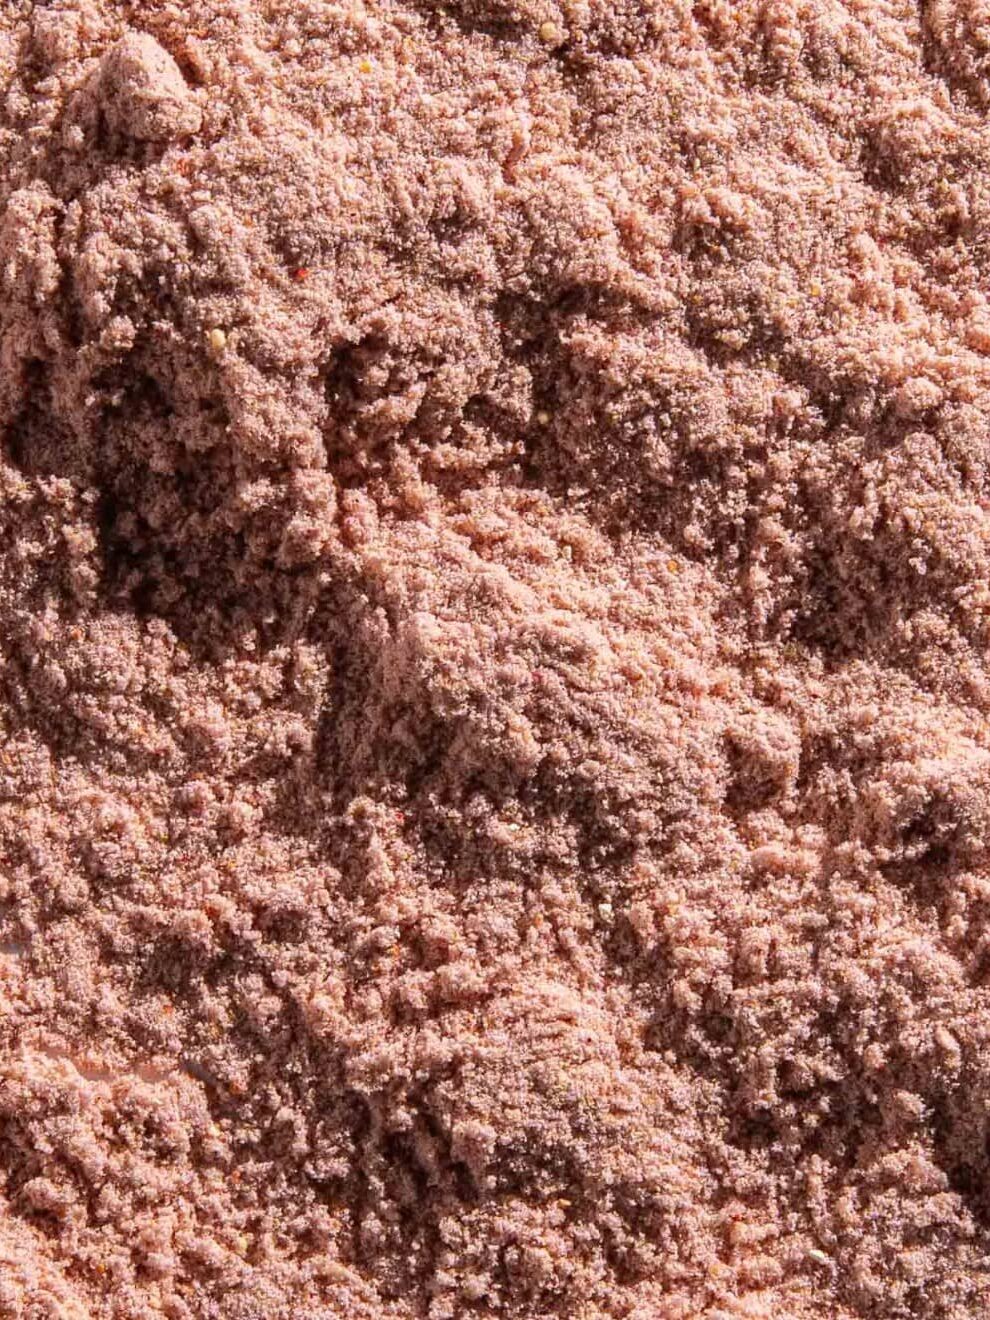 A close up of Ora's probiotic powder.